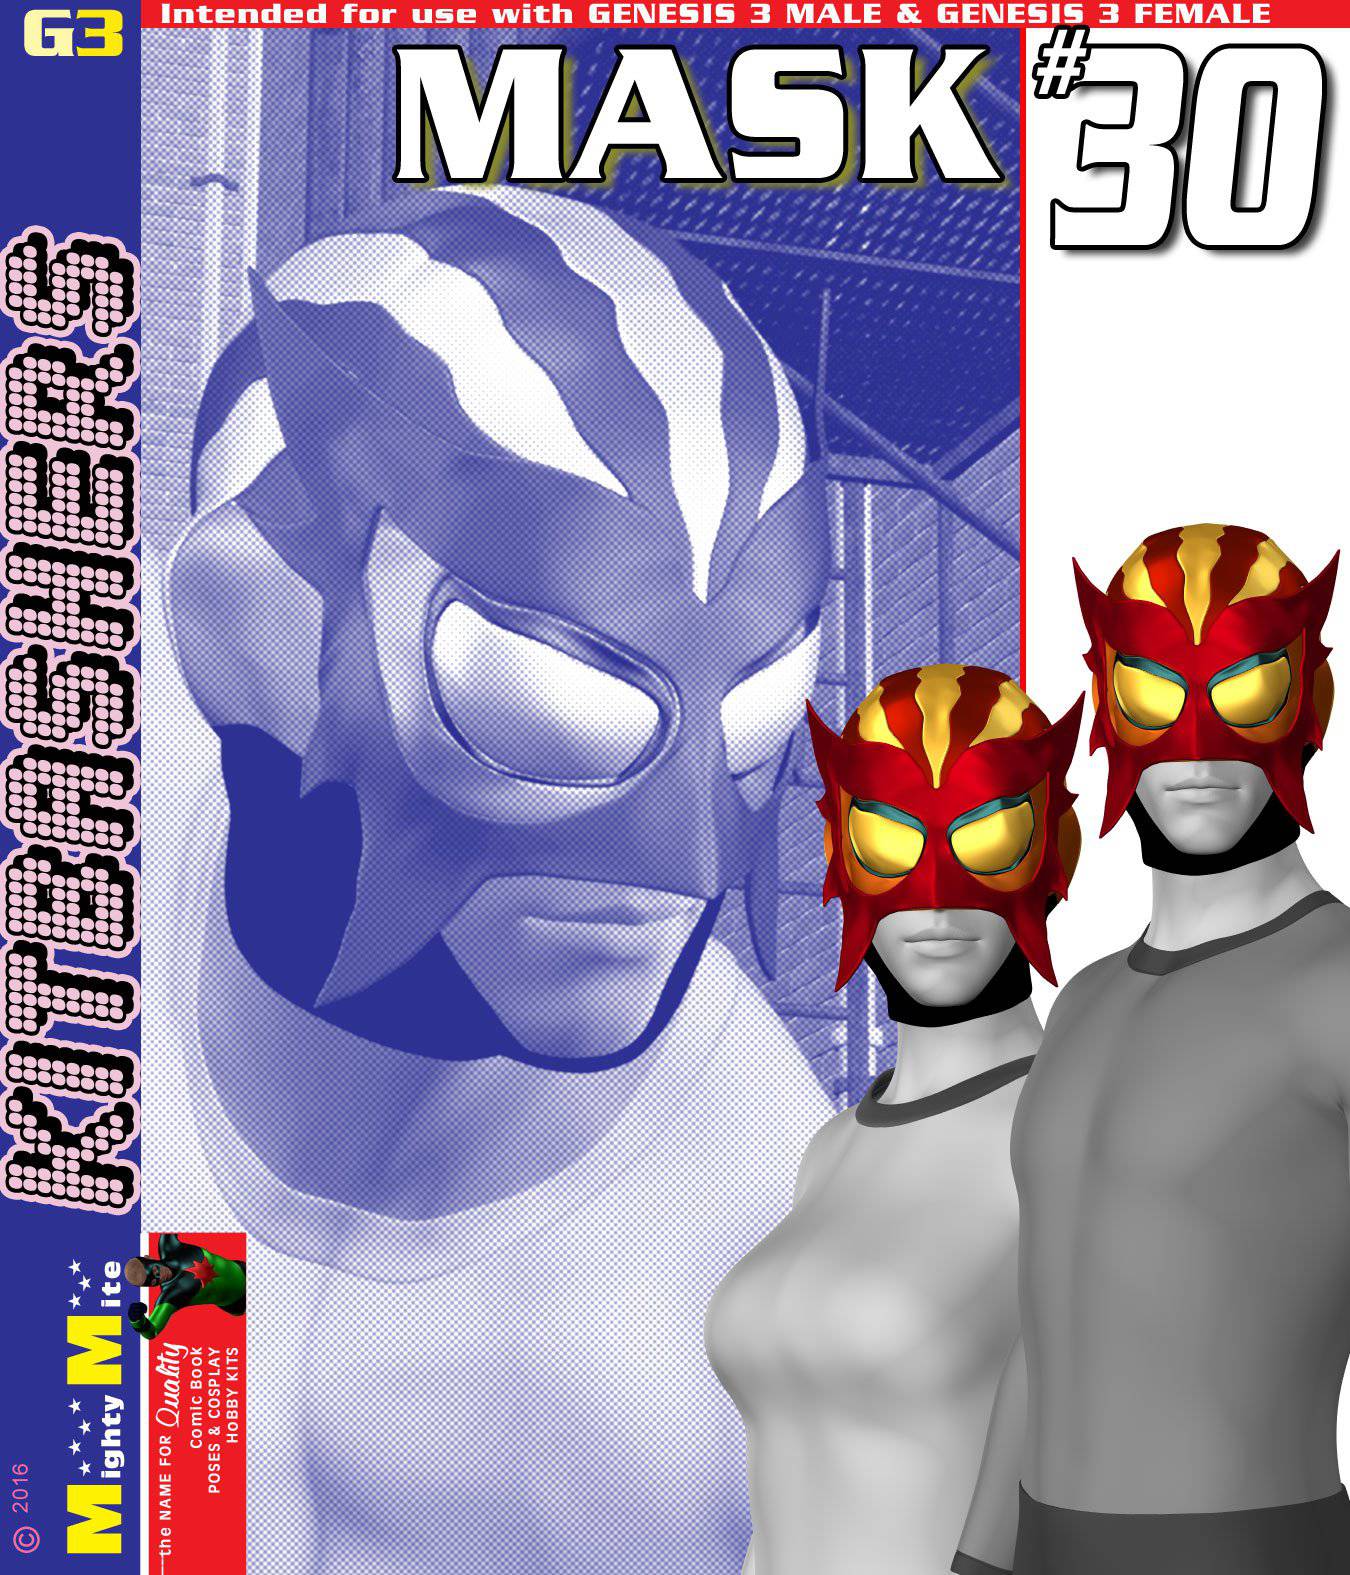 Mask 030 MMKBG3_DAZ3DDL